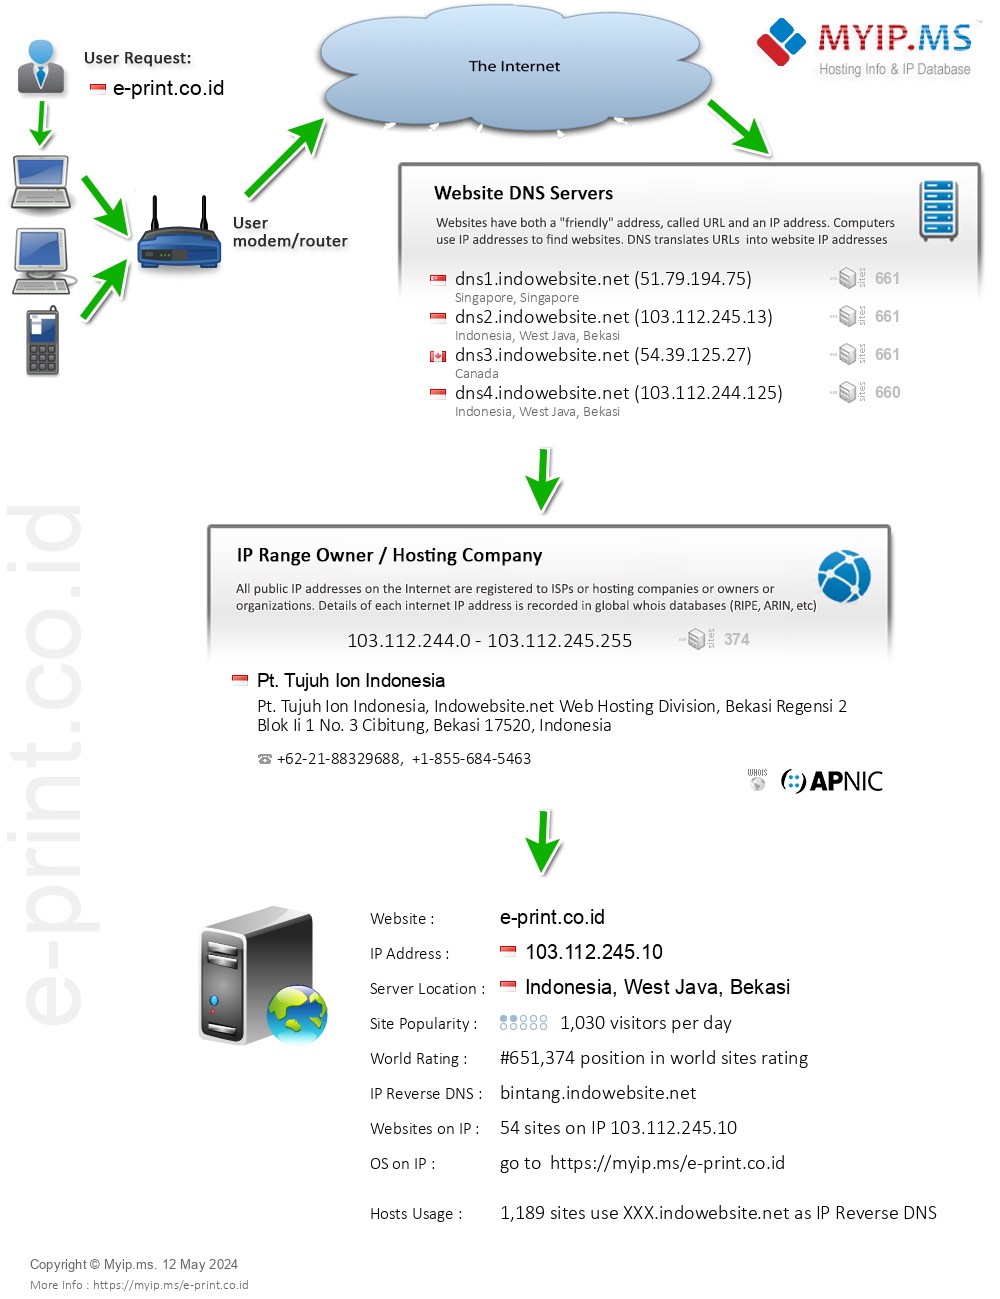 E-print.co.id - Website Hosting Visual IP Diagram